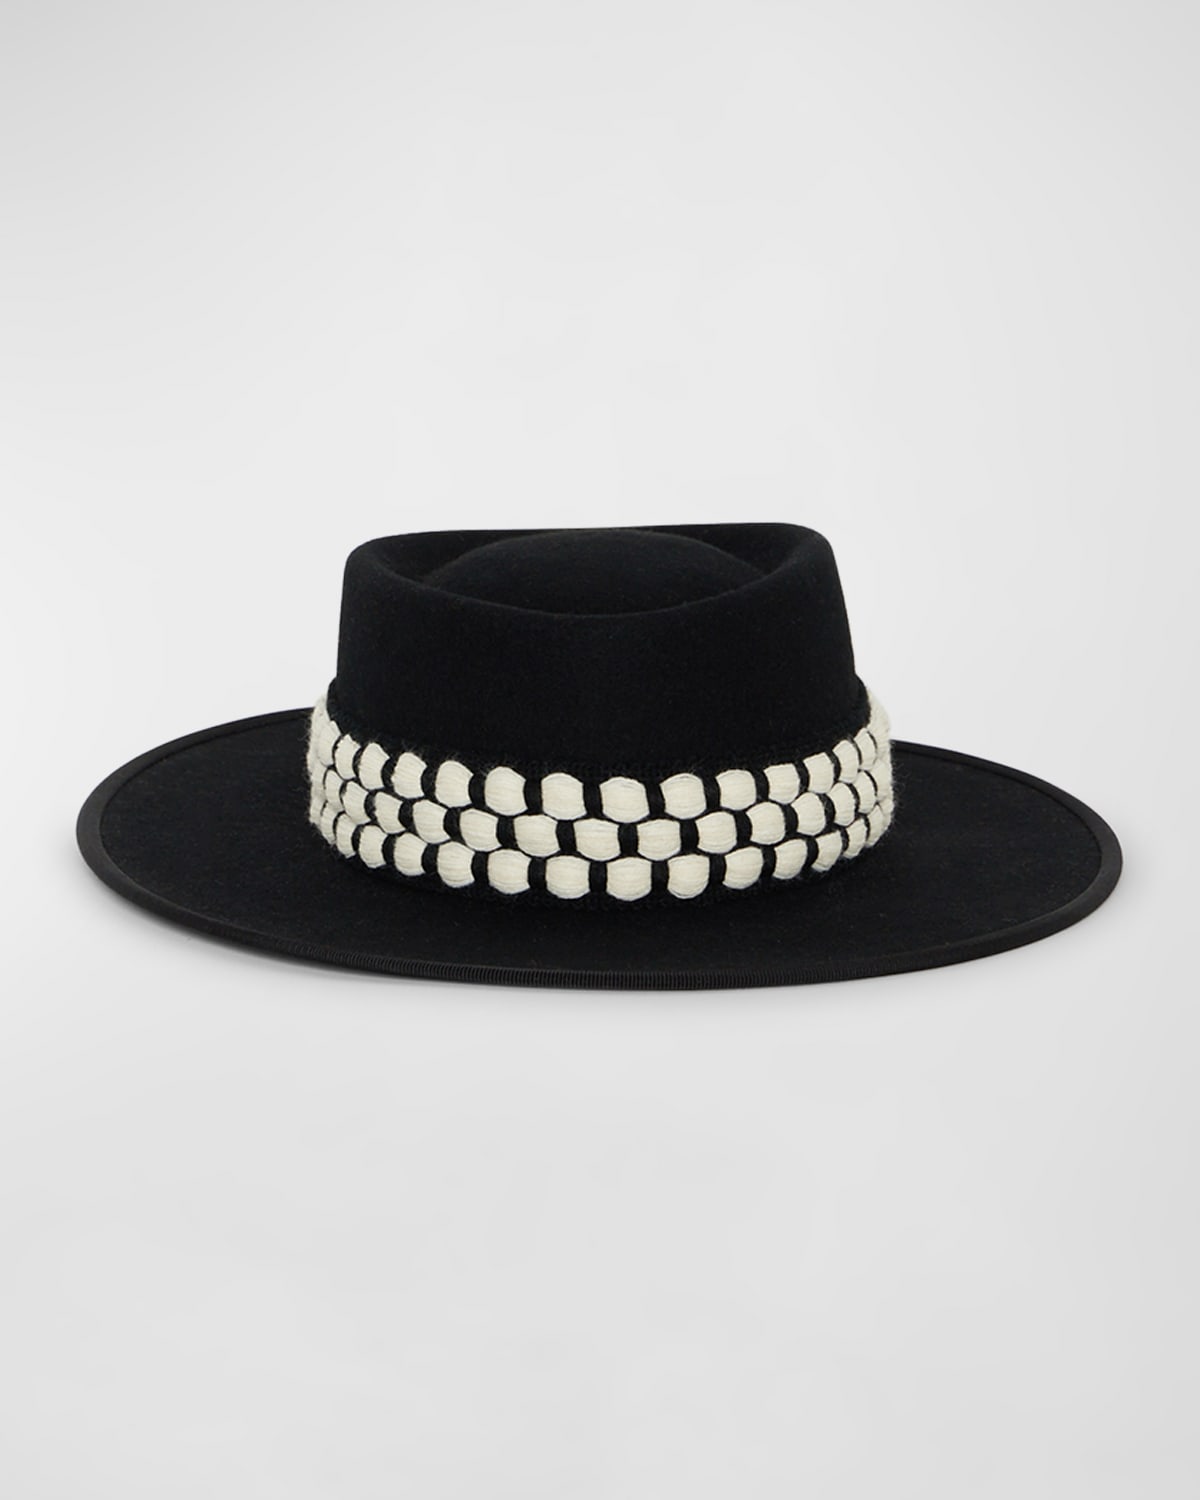 D'Estree Gerhard 23 Wool Felt Structured Hat